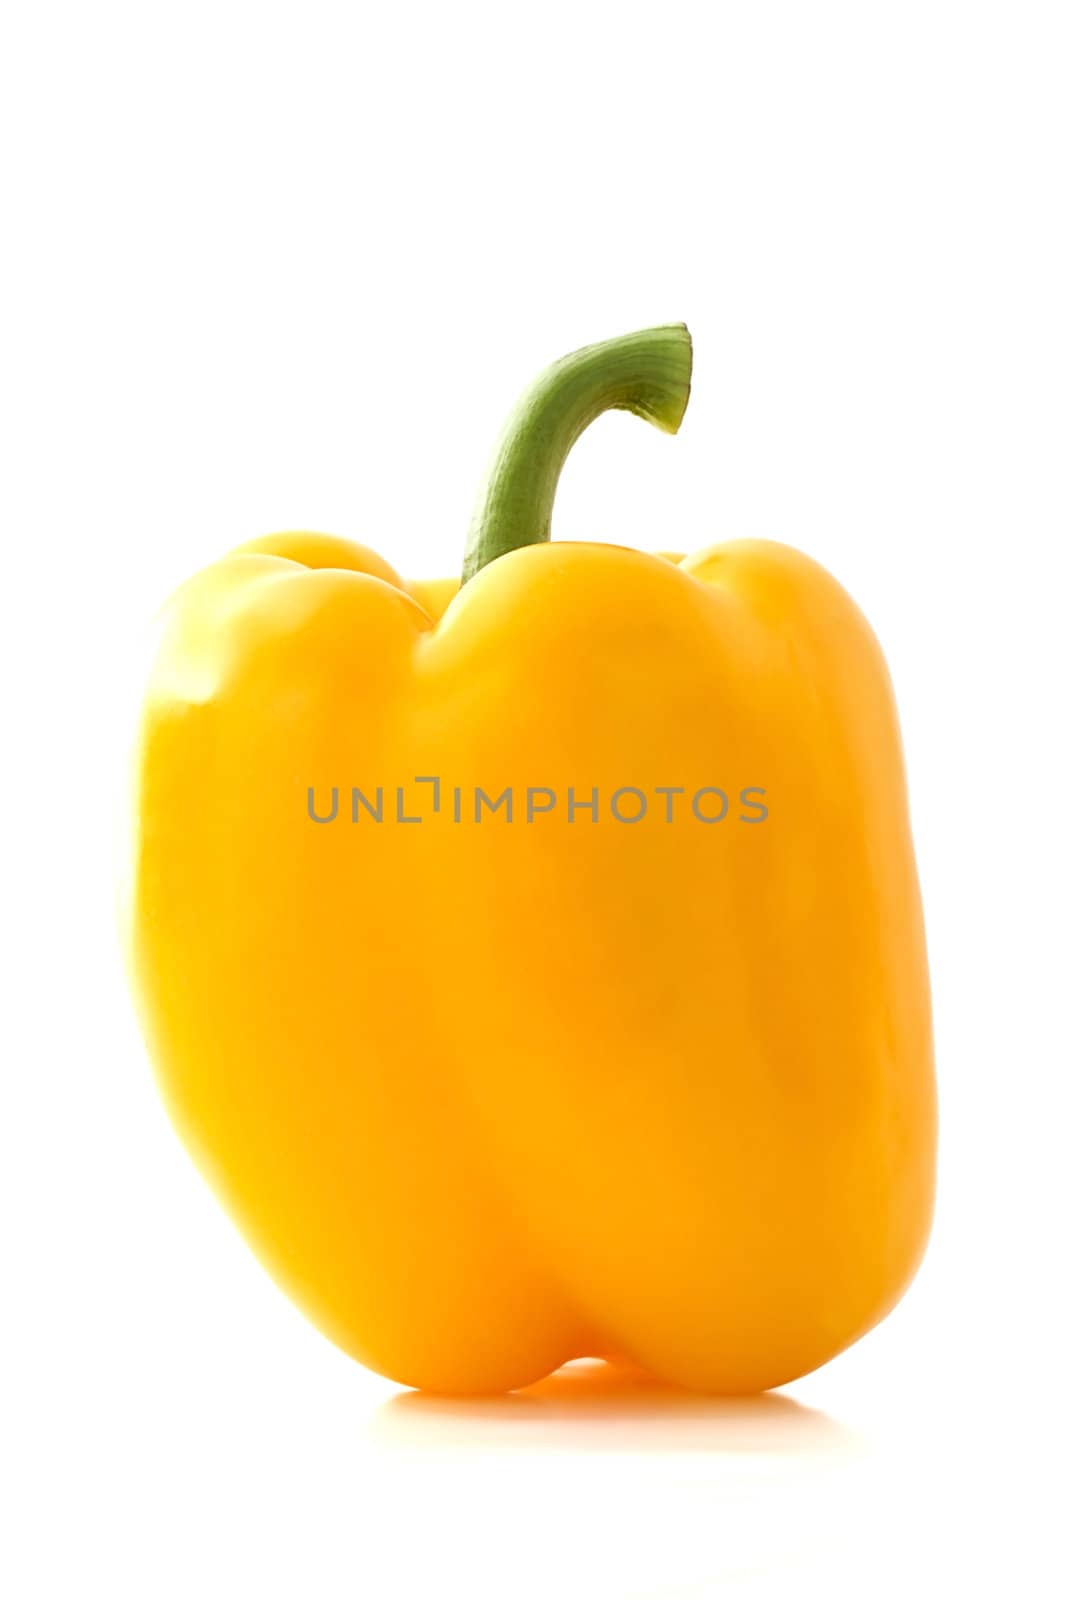 one yellow paprika isolated on white background